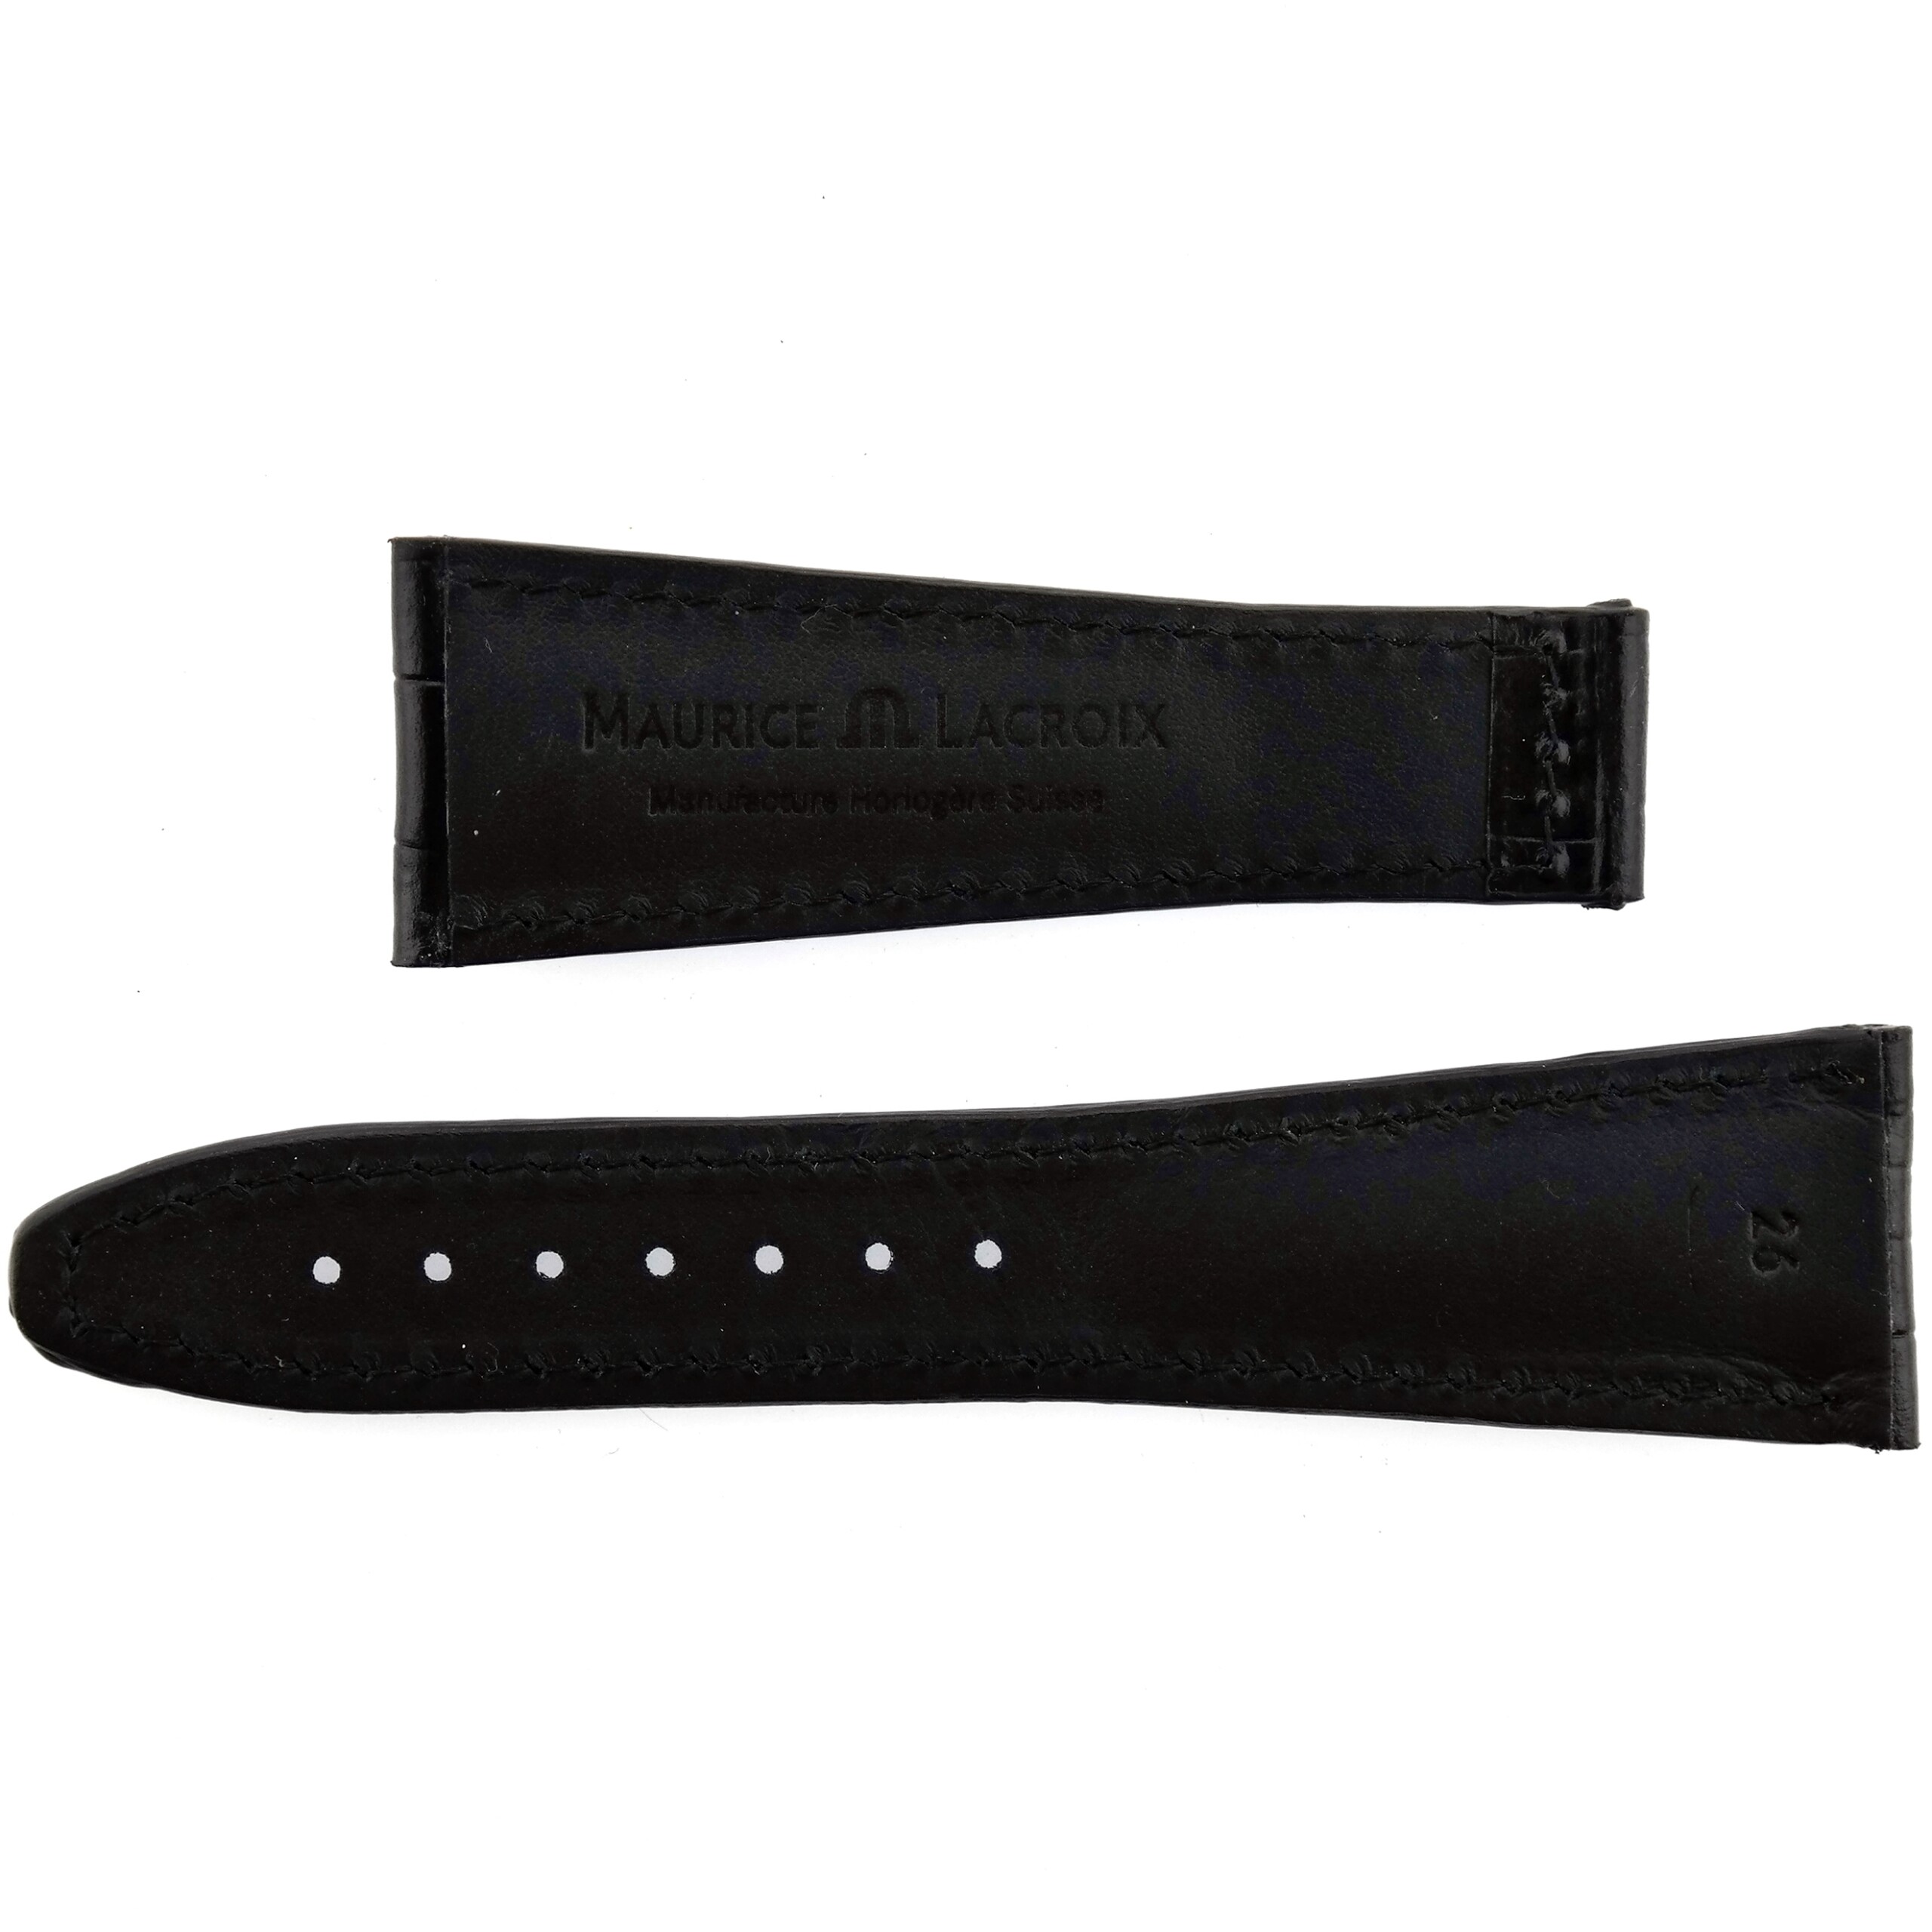 MAURICE LACROIX - Pontos - Leather Watch Strap - 26/18 75/115 - Black